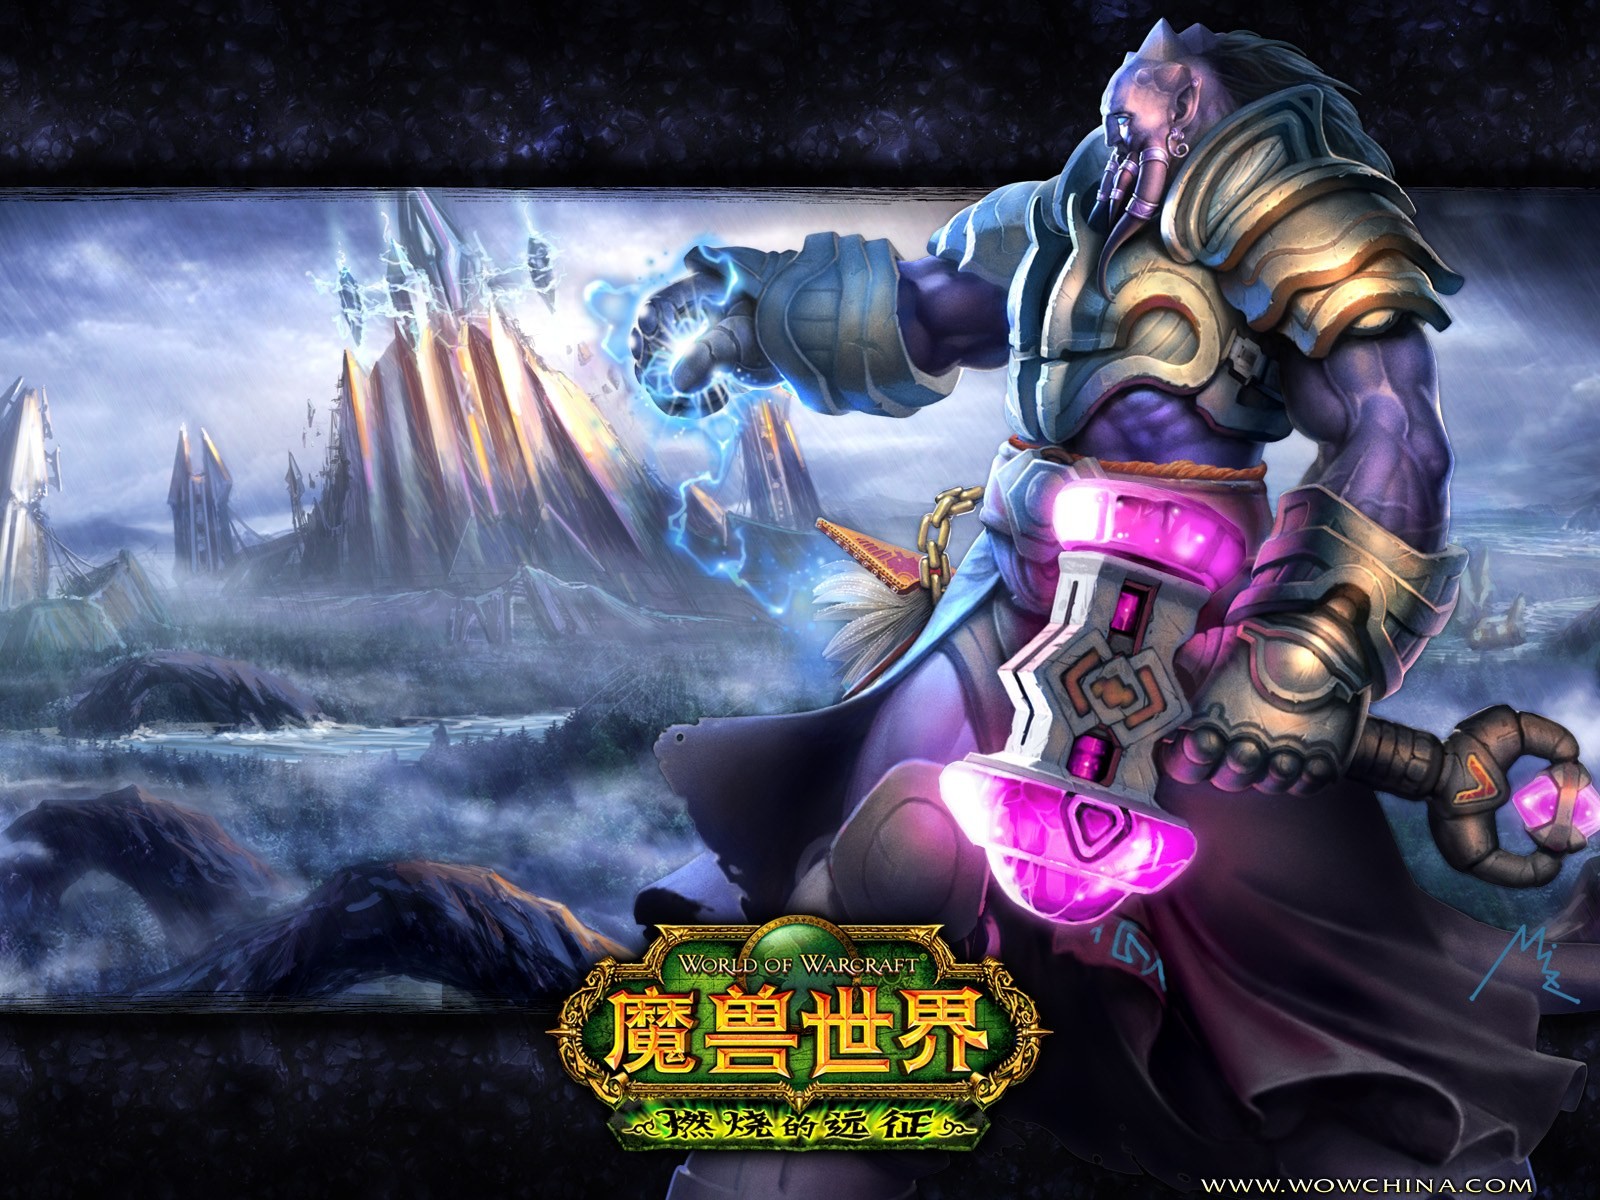 World of Warcraft: fondo de pantalla oficial de The Burning Crusade (1) #17 - 1600x1200